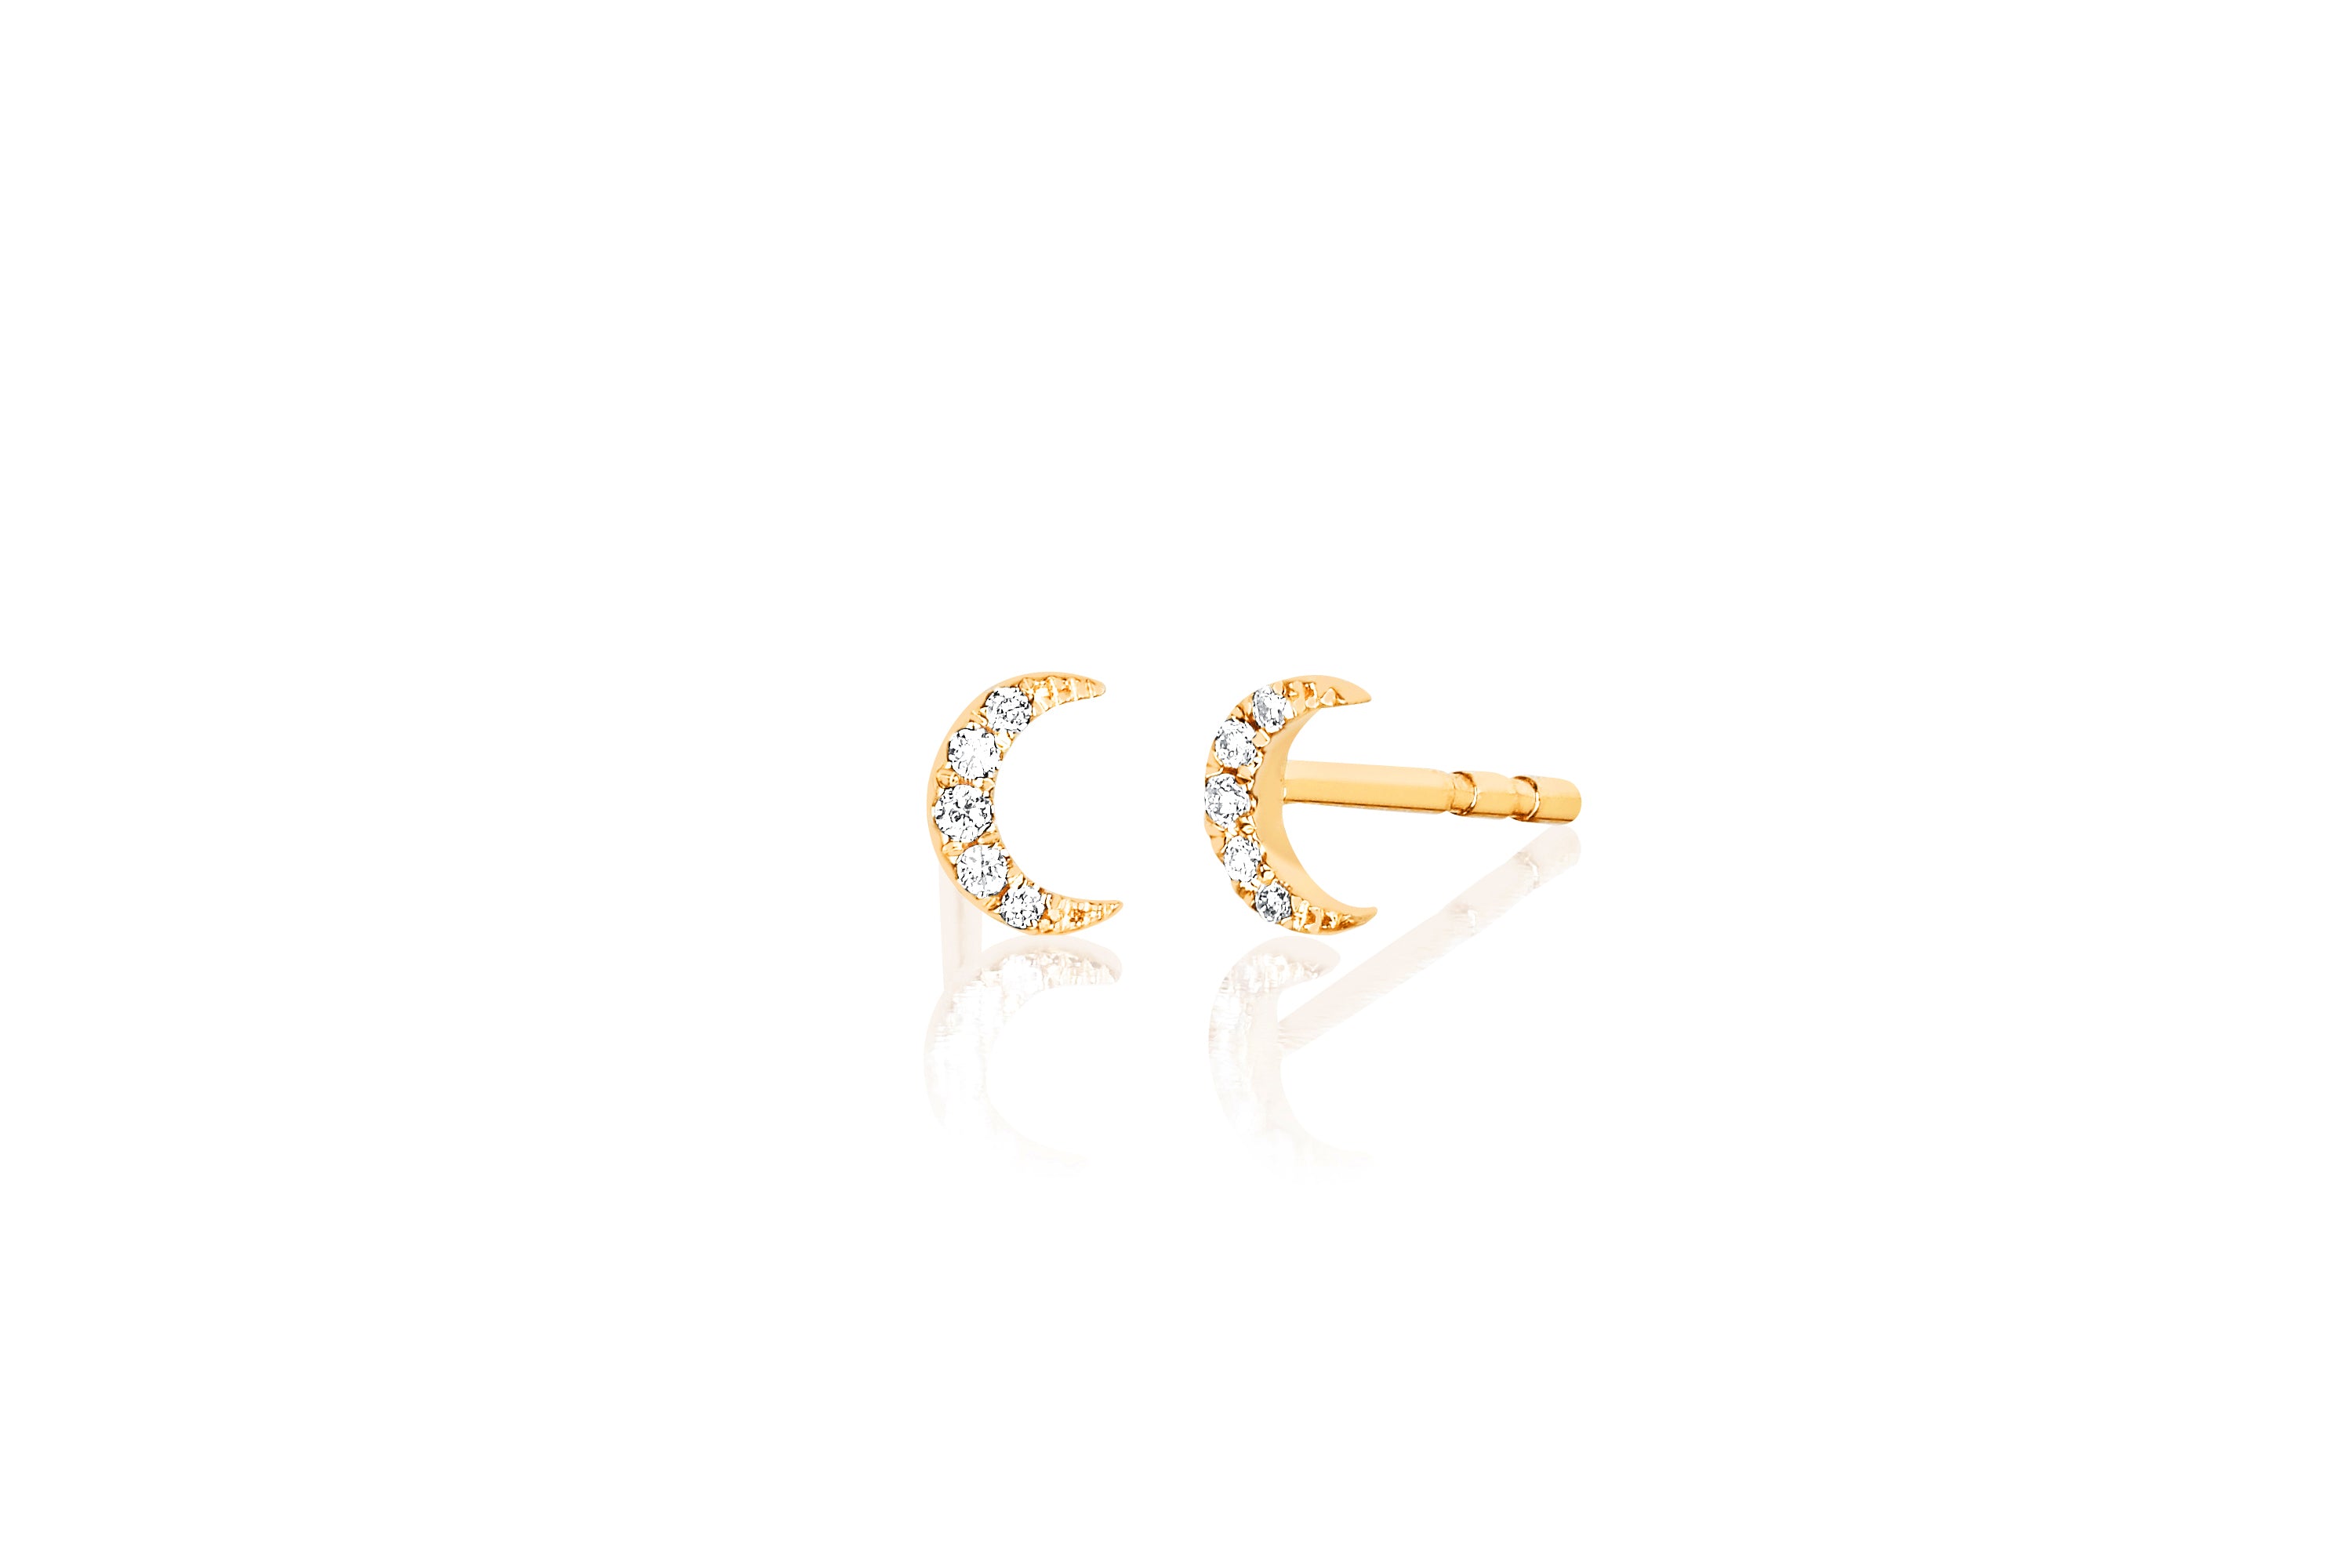 14k (karat) yellow gold miniature stud earrings with crescent moon shape encrusted in diamonds